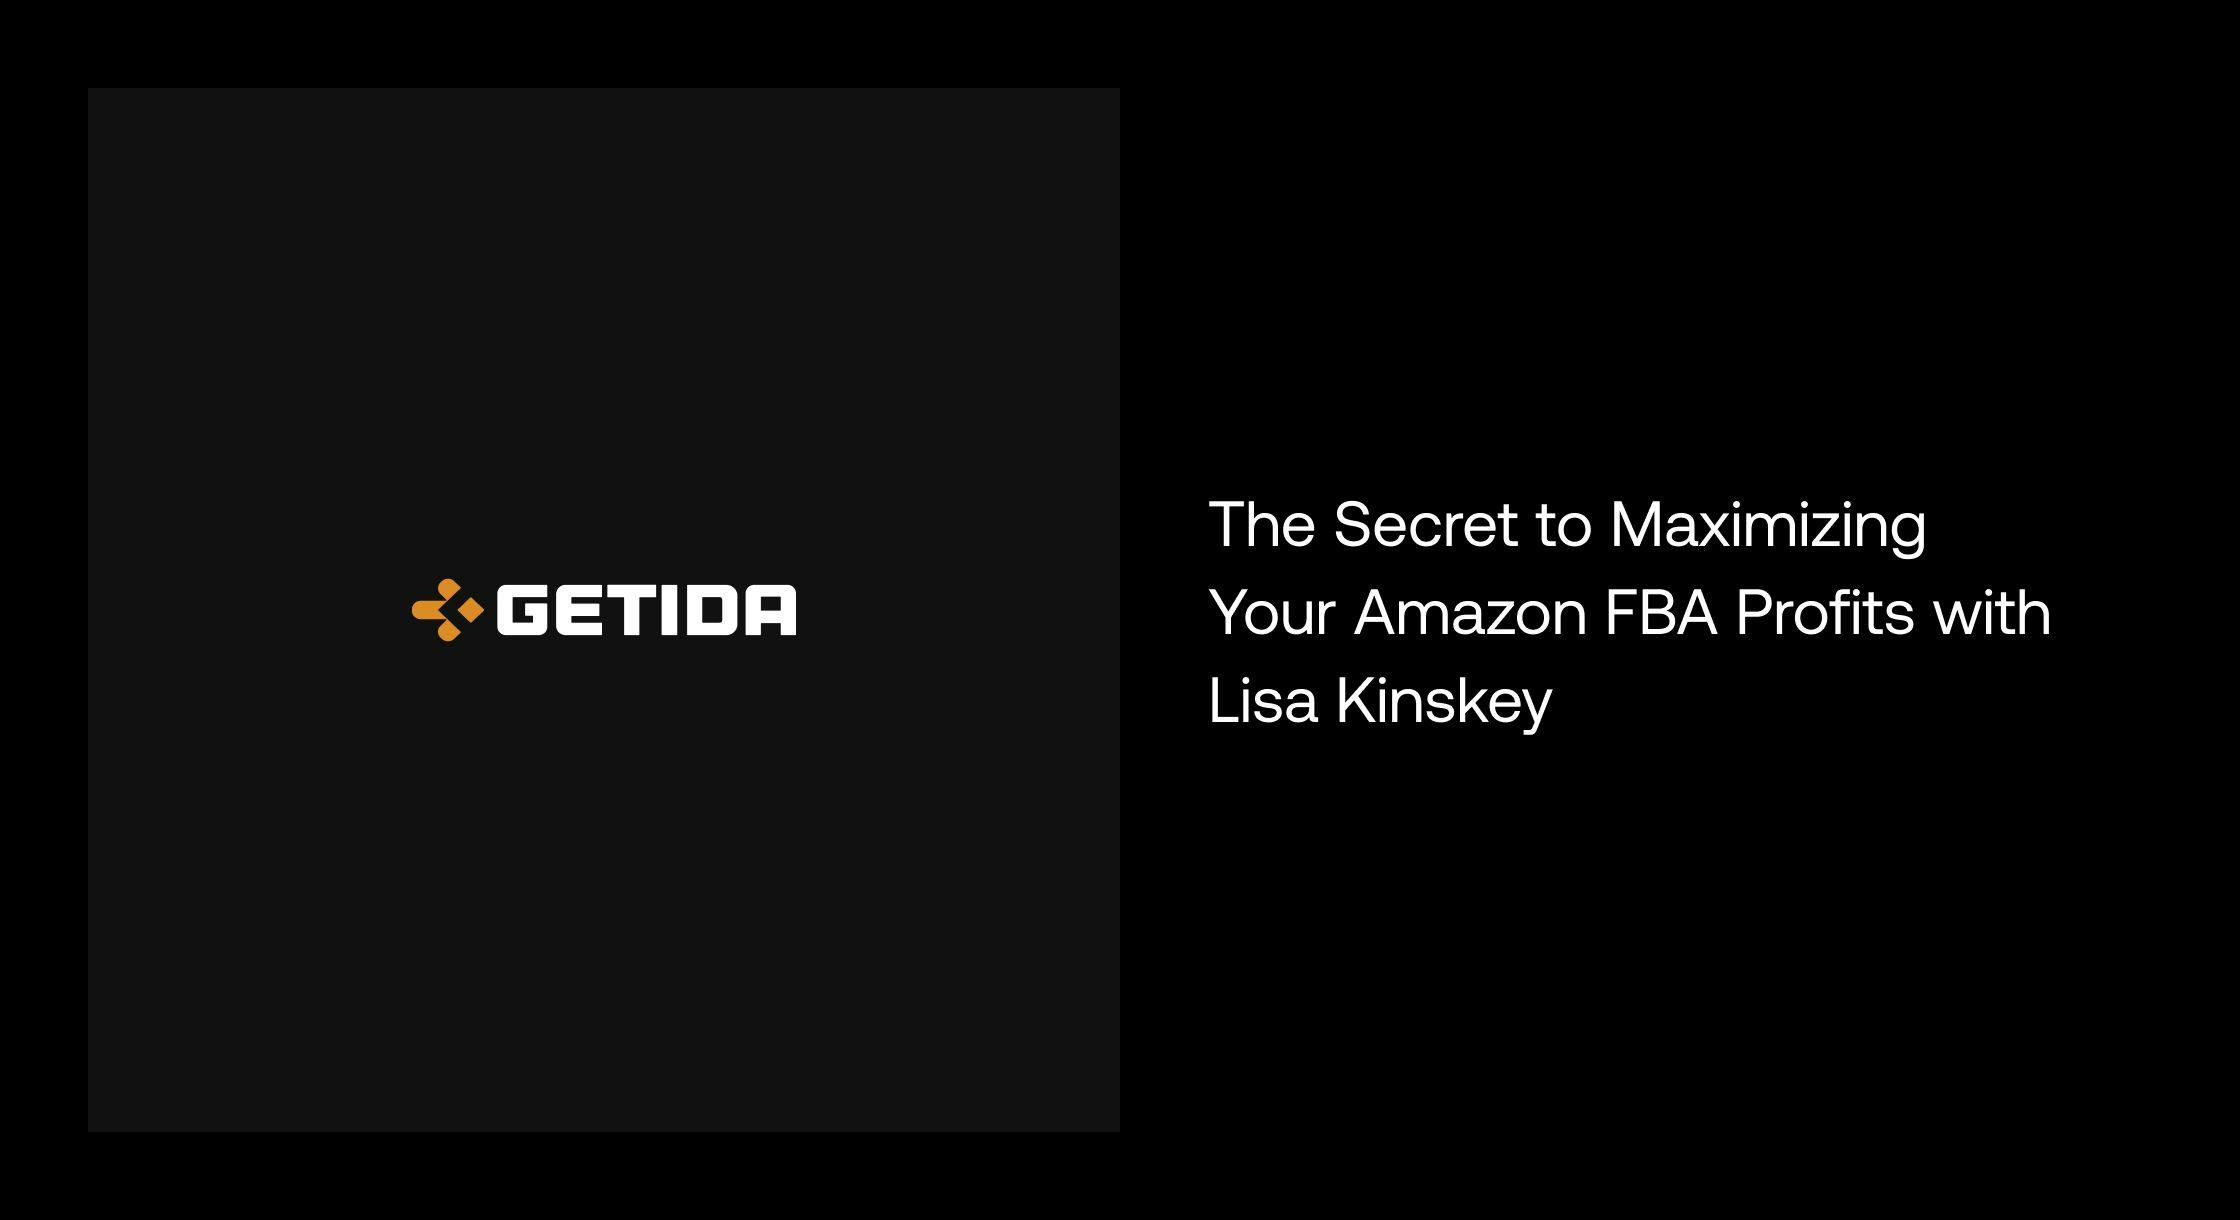 Getida: The Secret to Maximizing Your Amazon FBA Profits